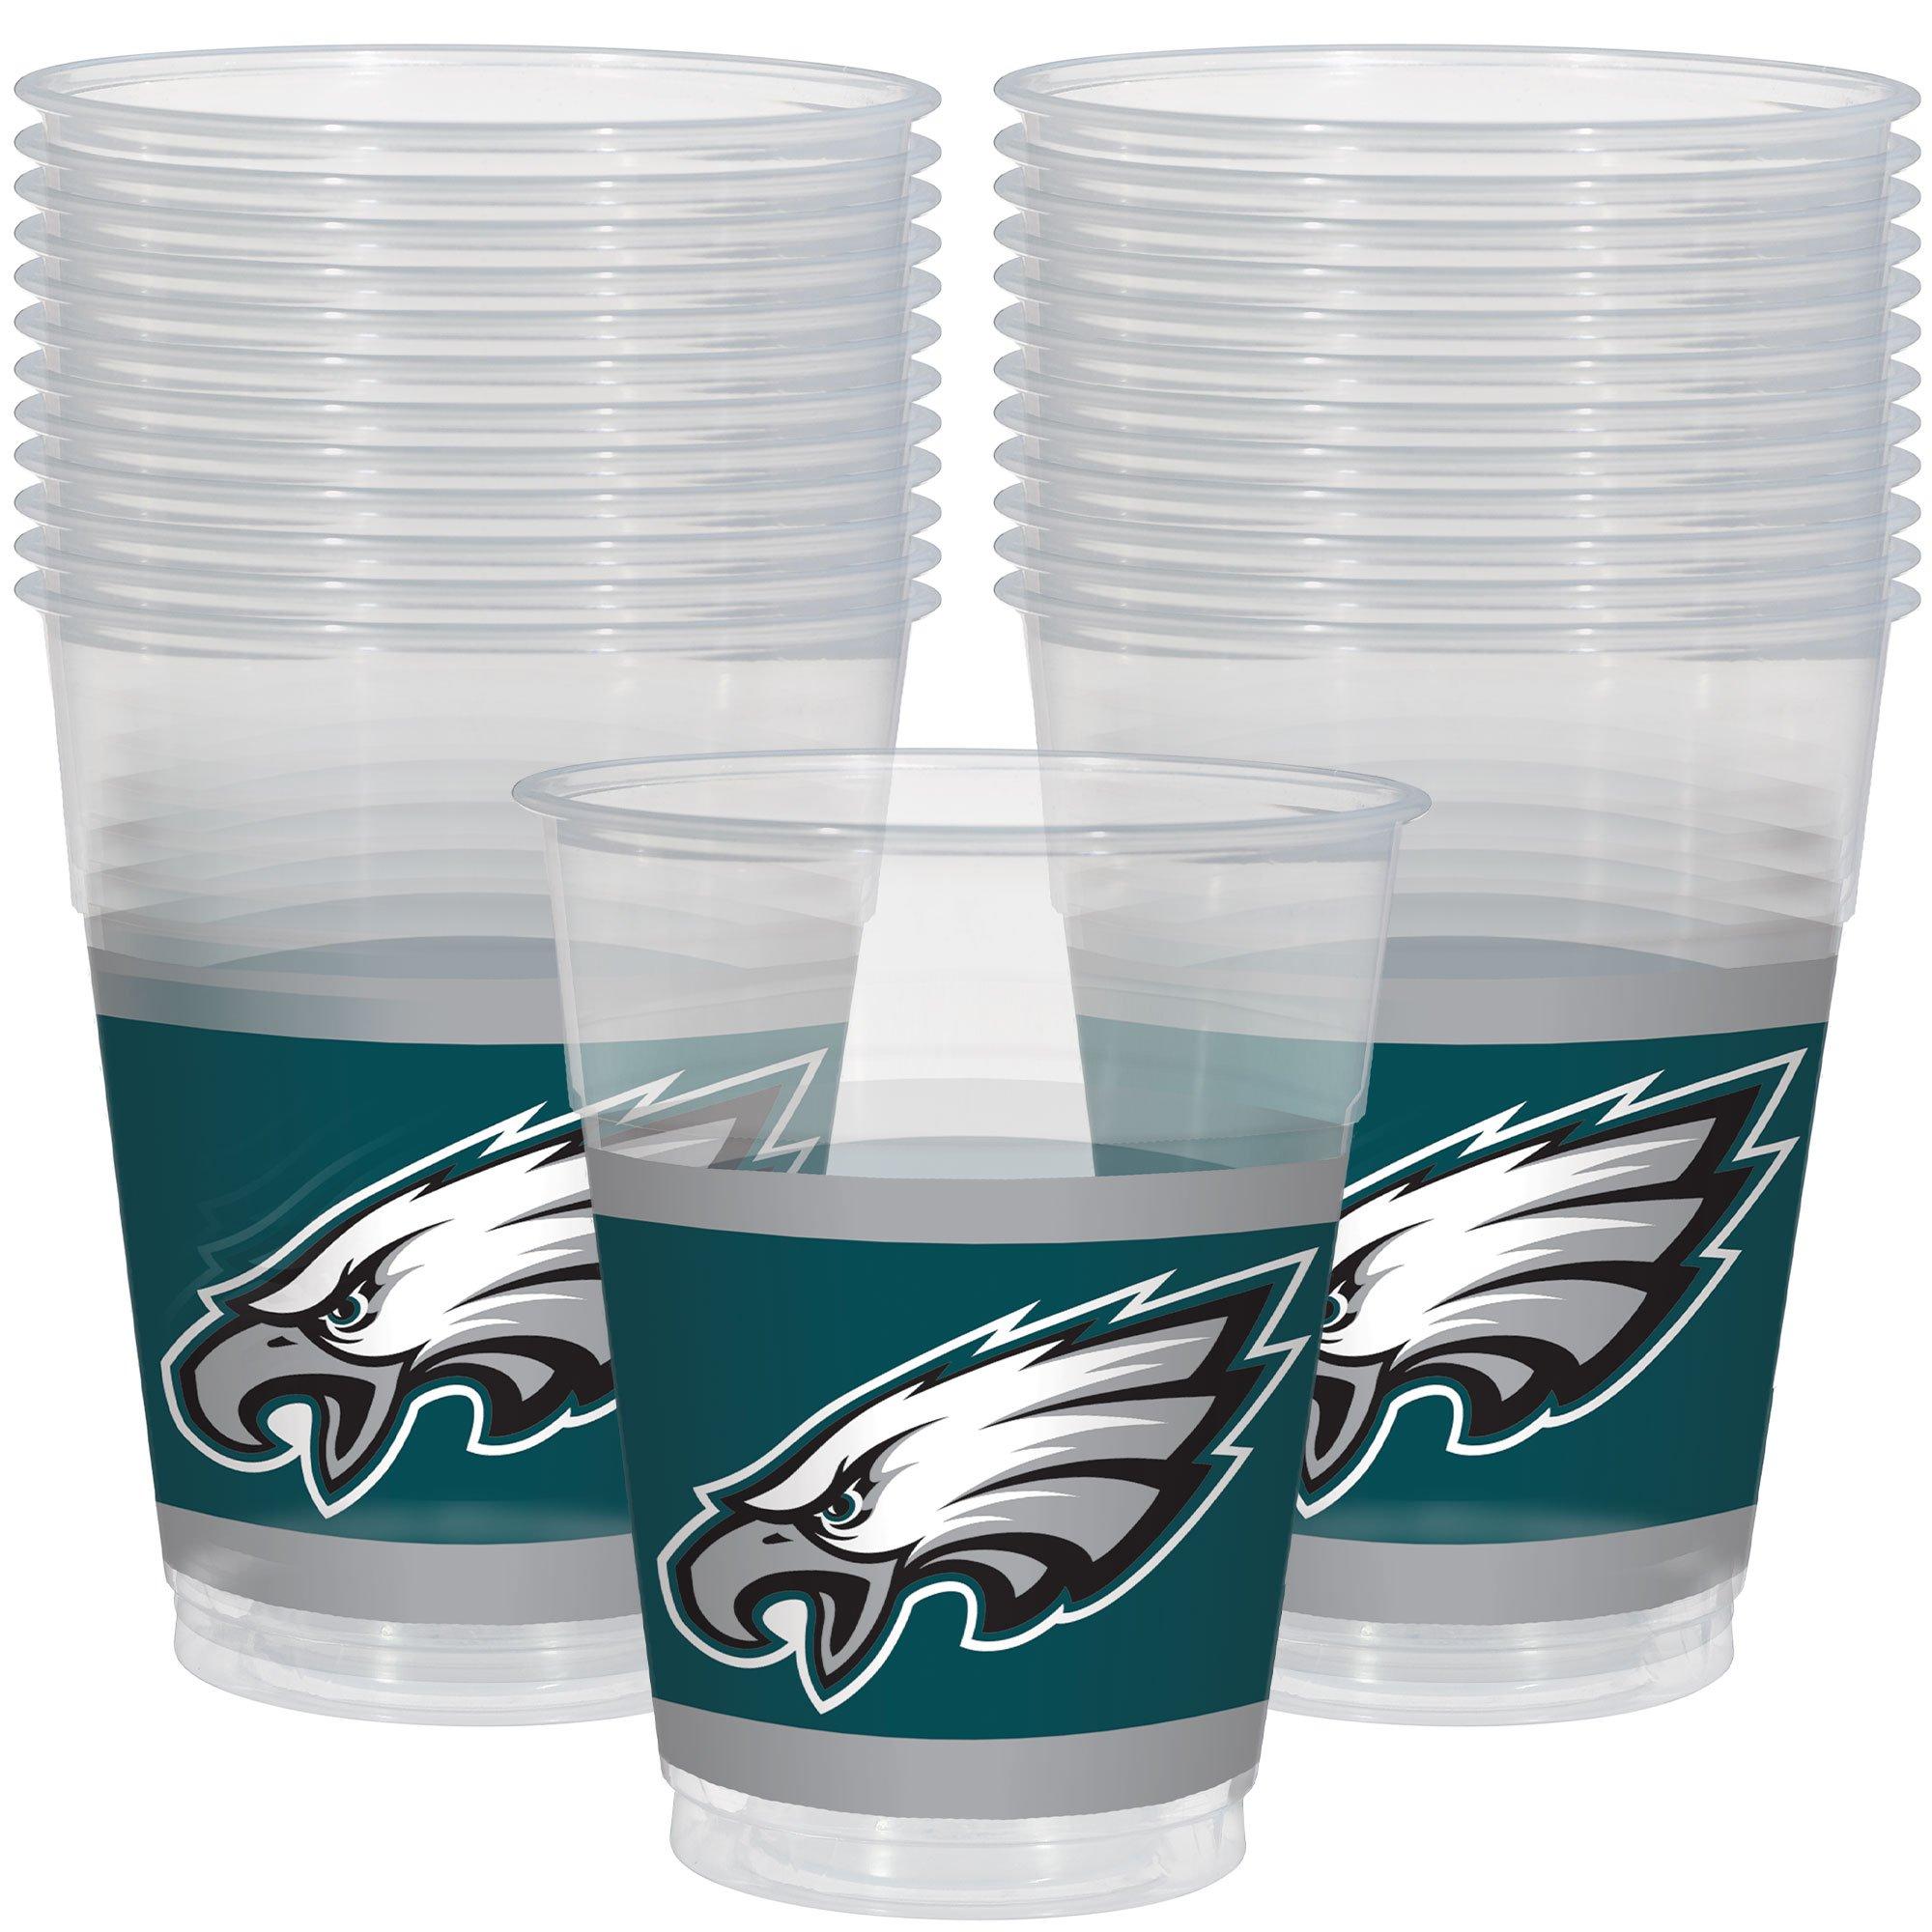 Philadelphia Eagles Cups.